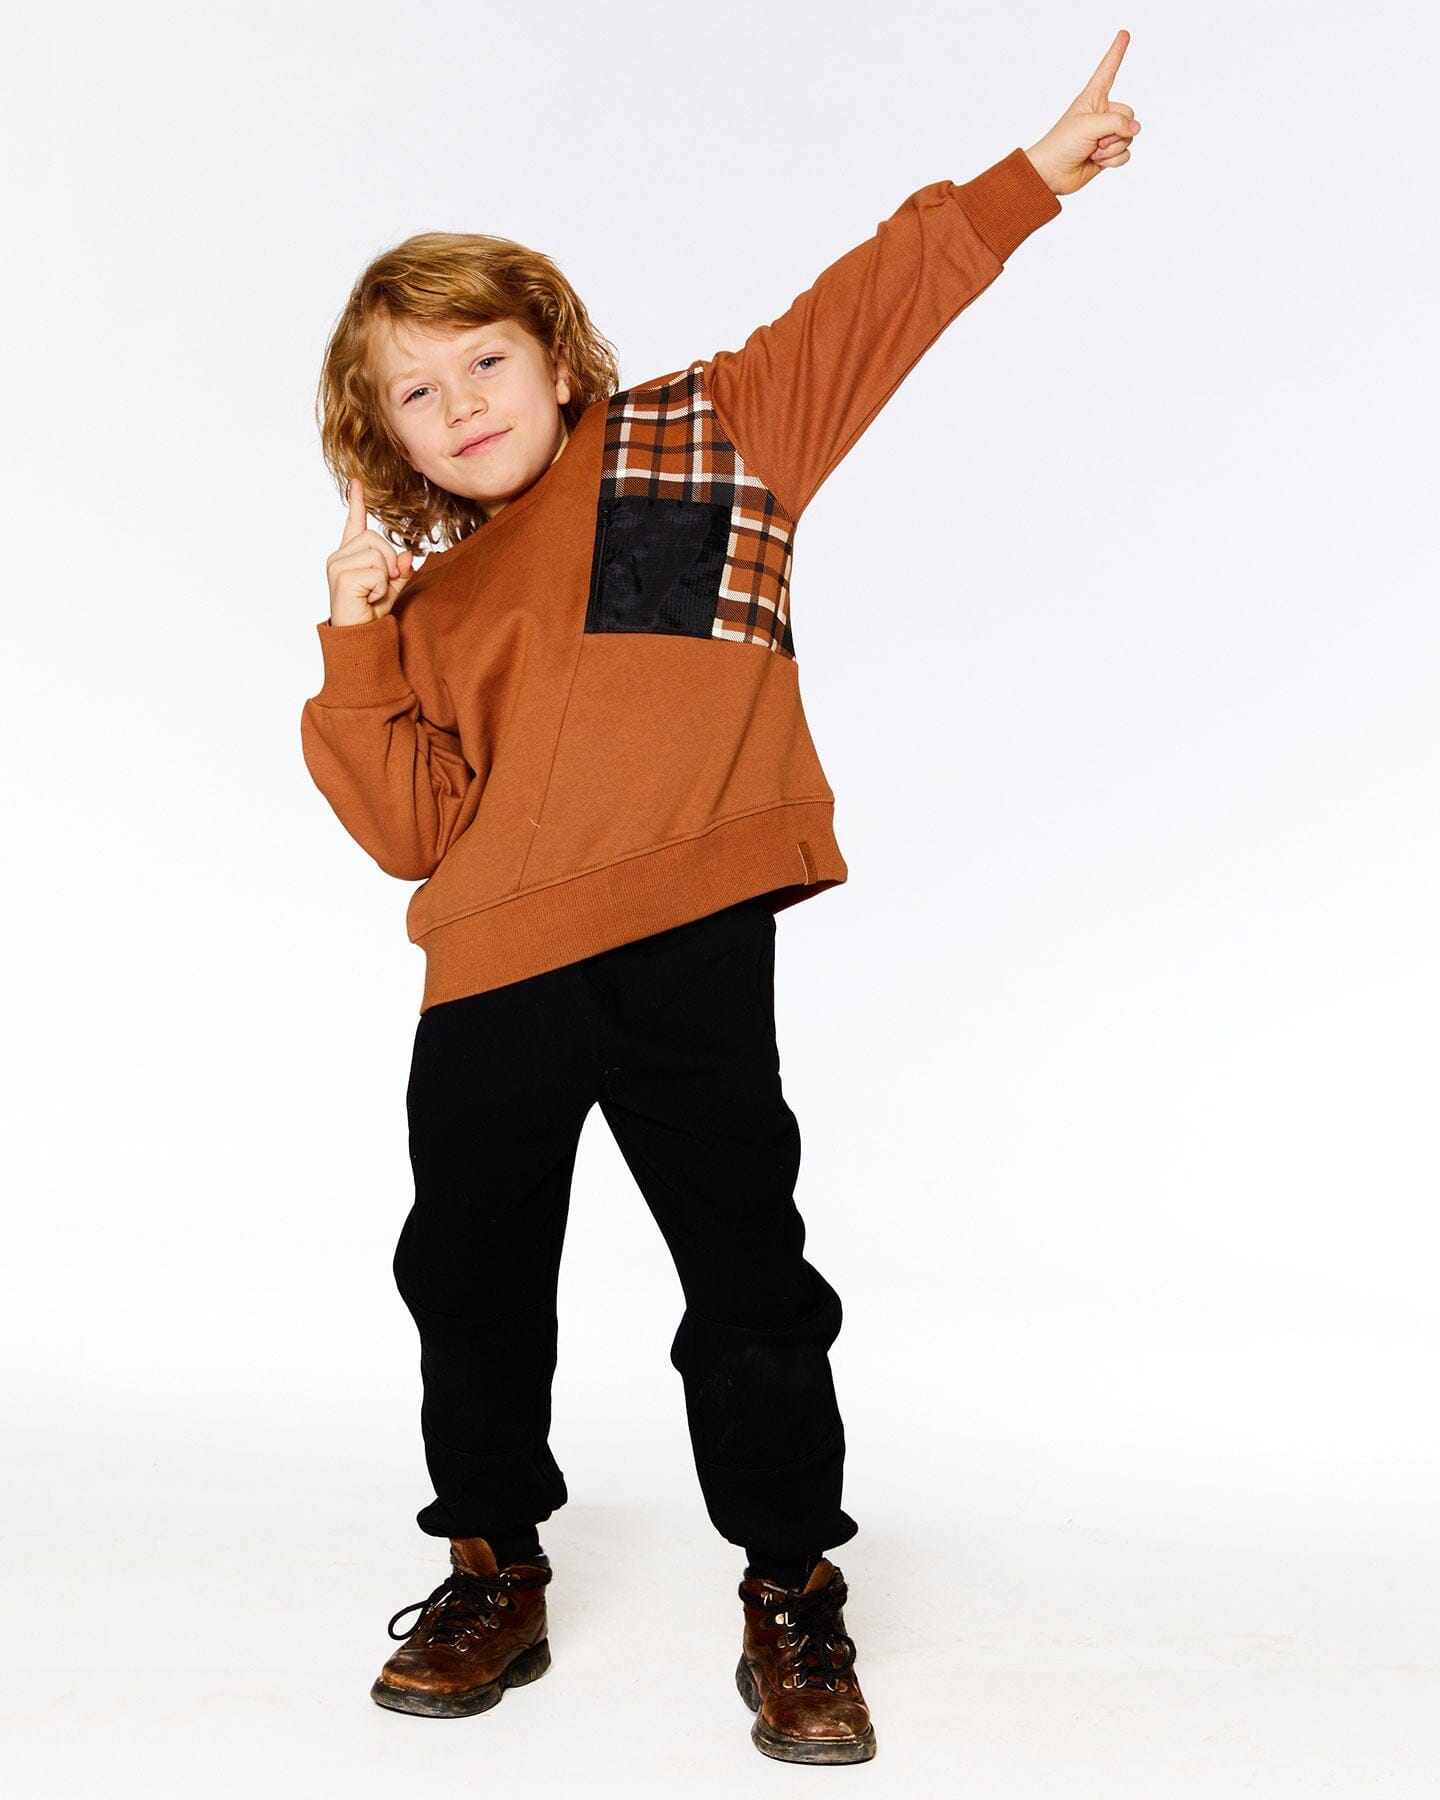 Sweatshirt Caramel With Zipper Pocket - F20U35_915